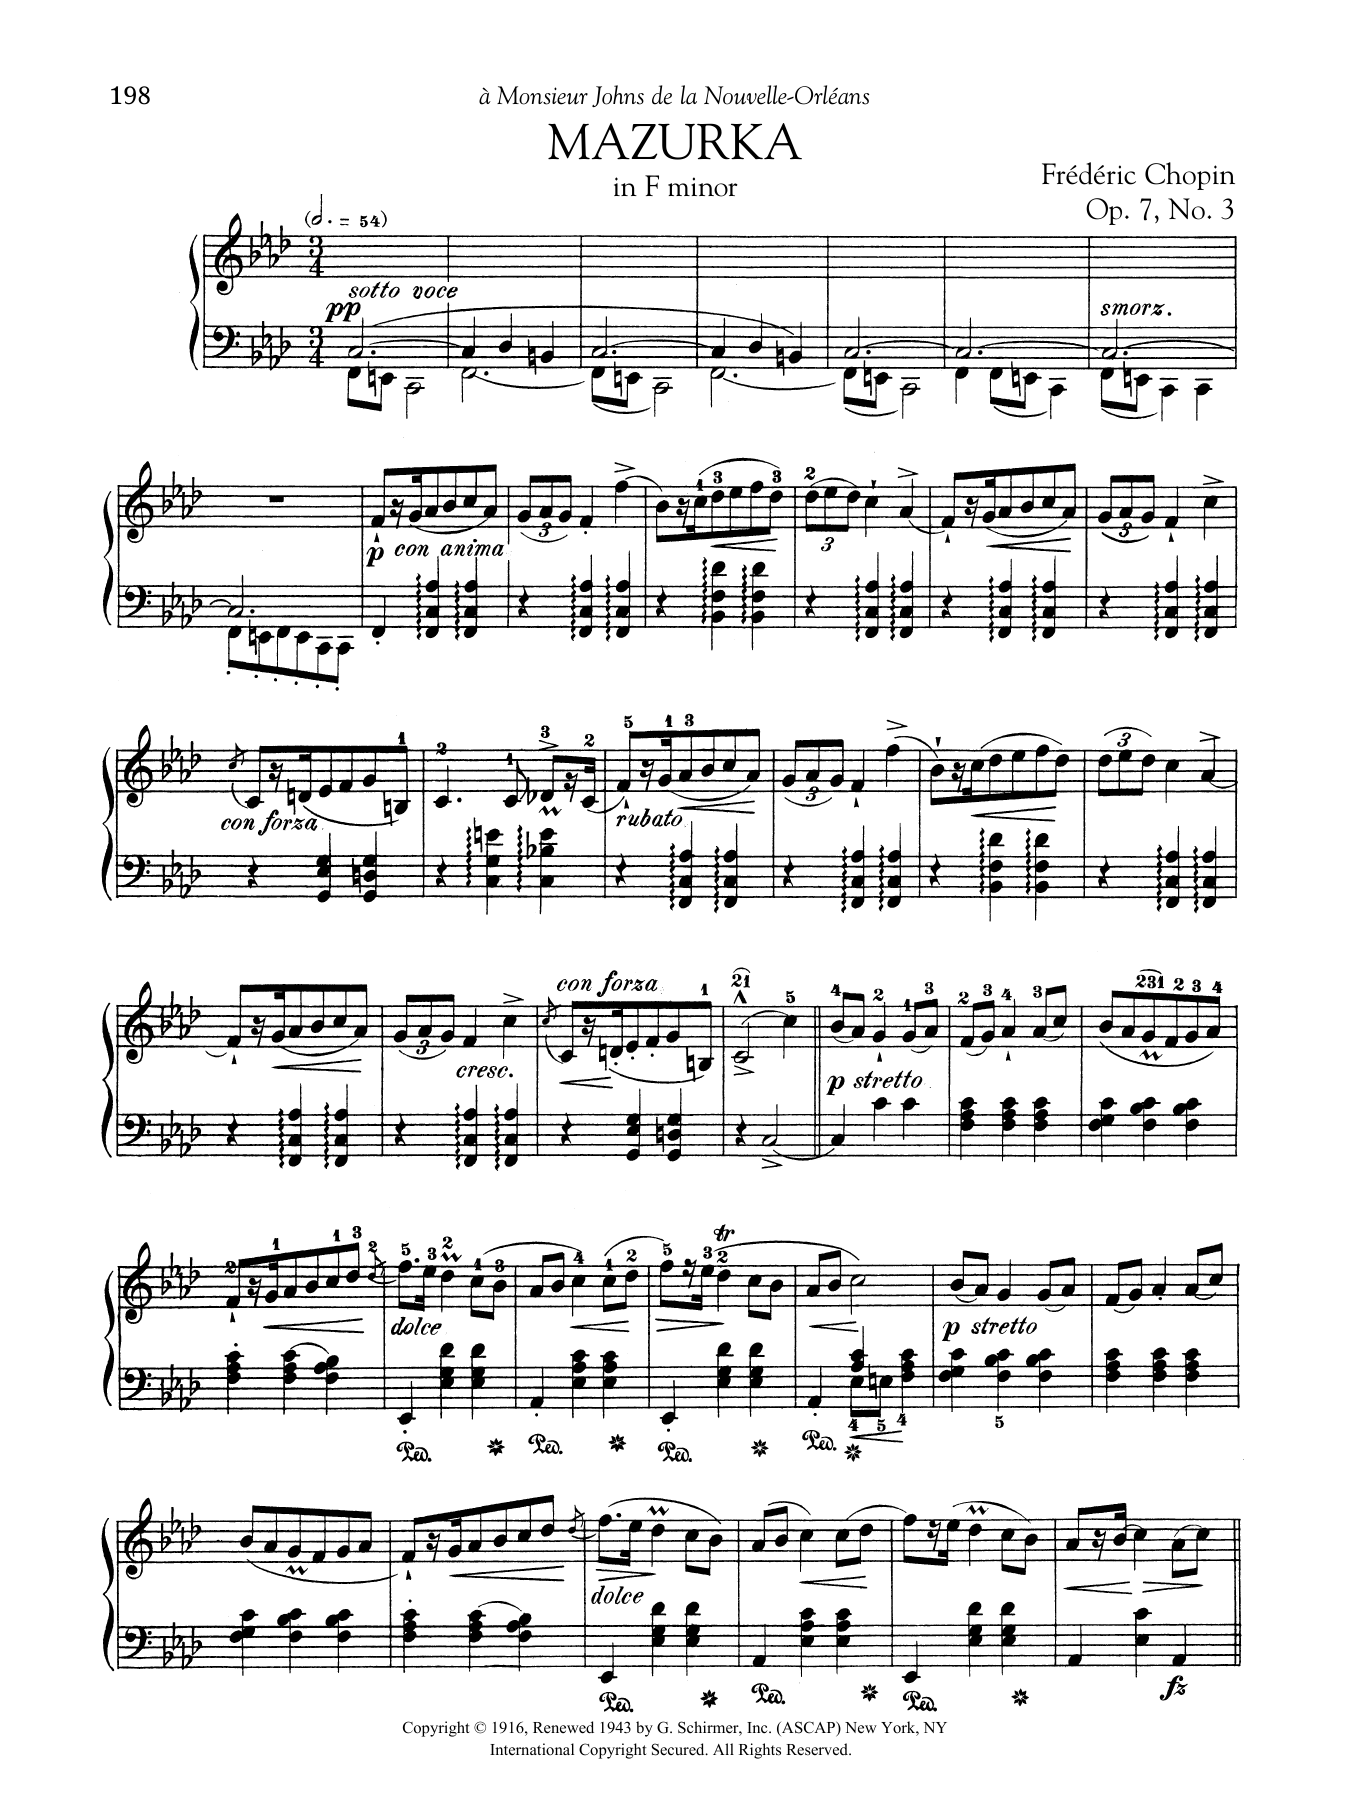 Download Frederic Chopin Mazurka in F minor, Op. 7, No. 3 Sheet Music